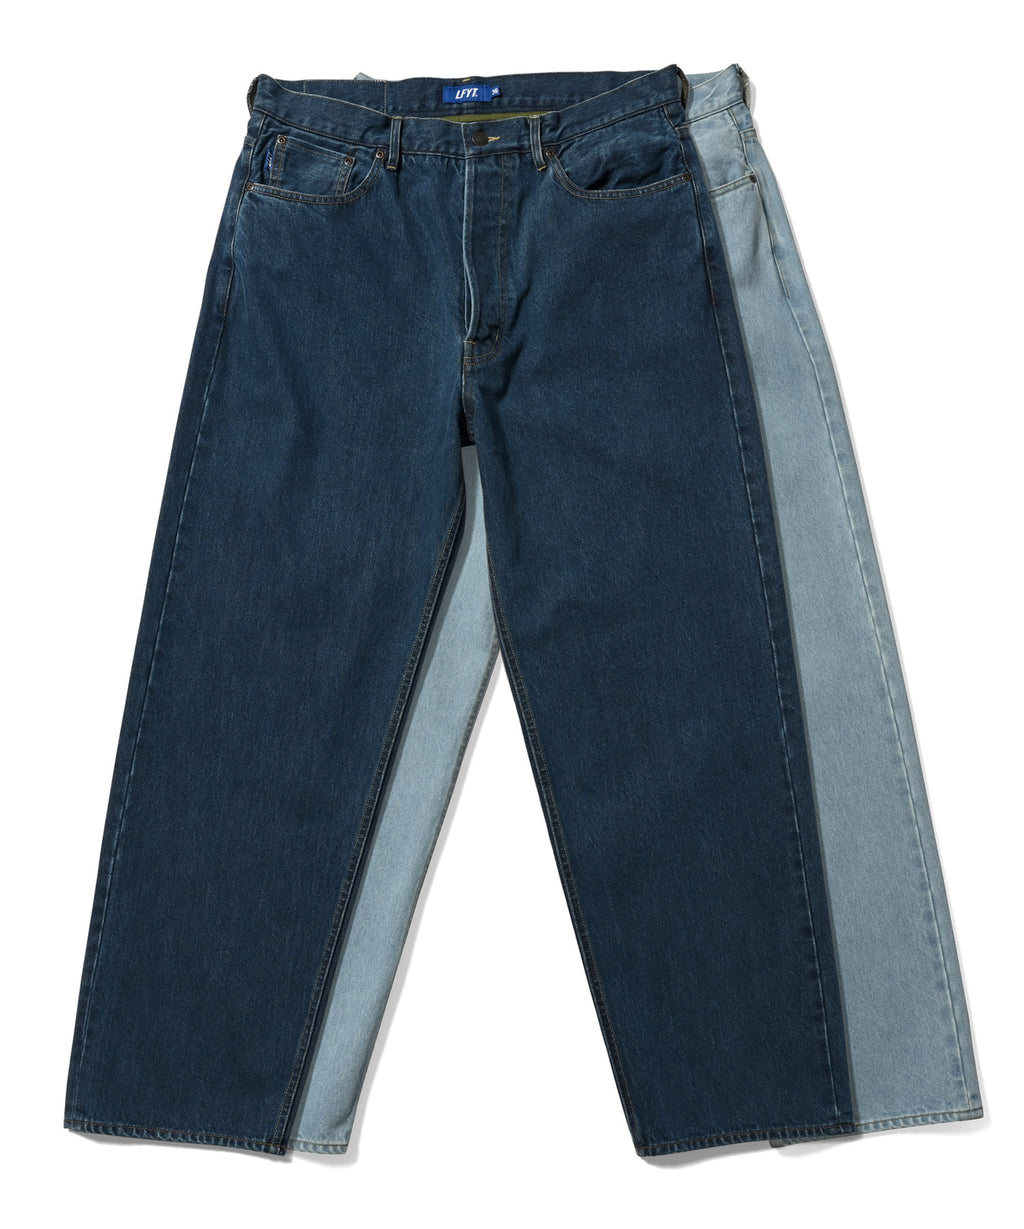 Online Shop Destroyed Cheeky Jean Shorts Women Size XL High Rise Denim Pants  | eBay